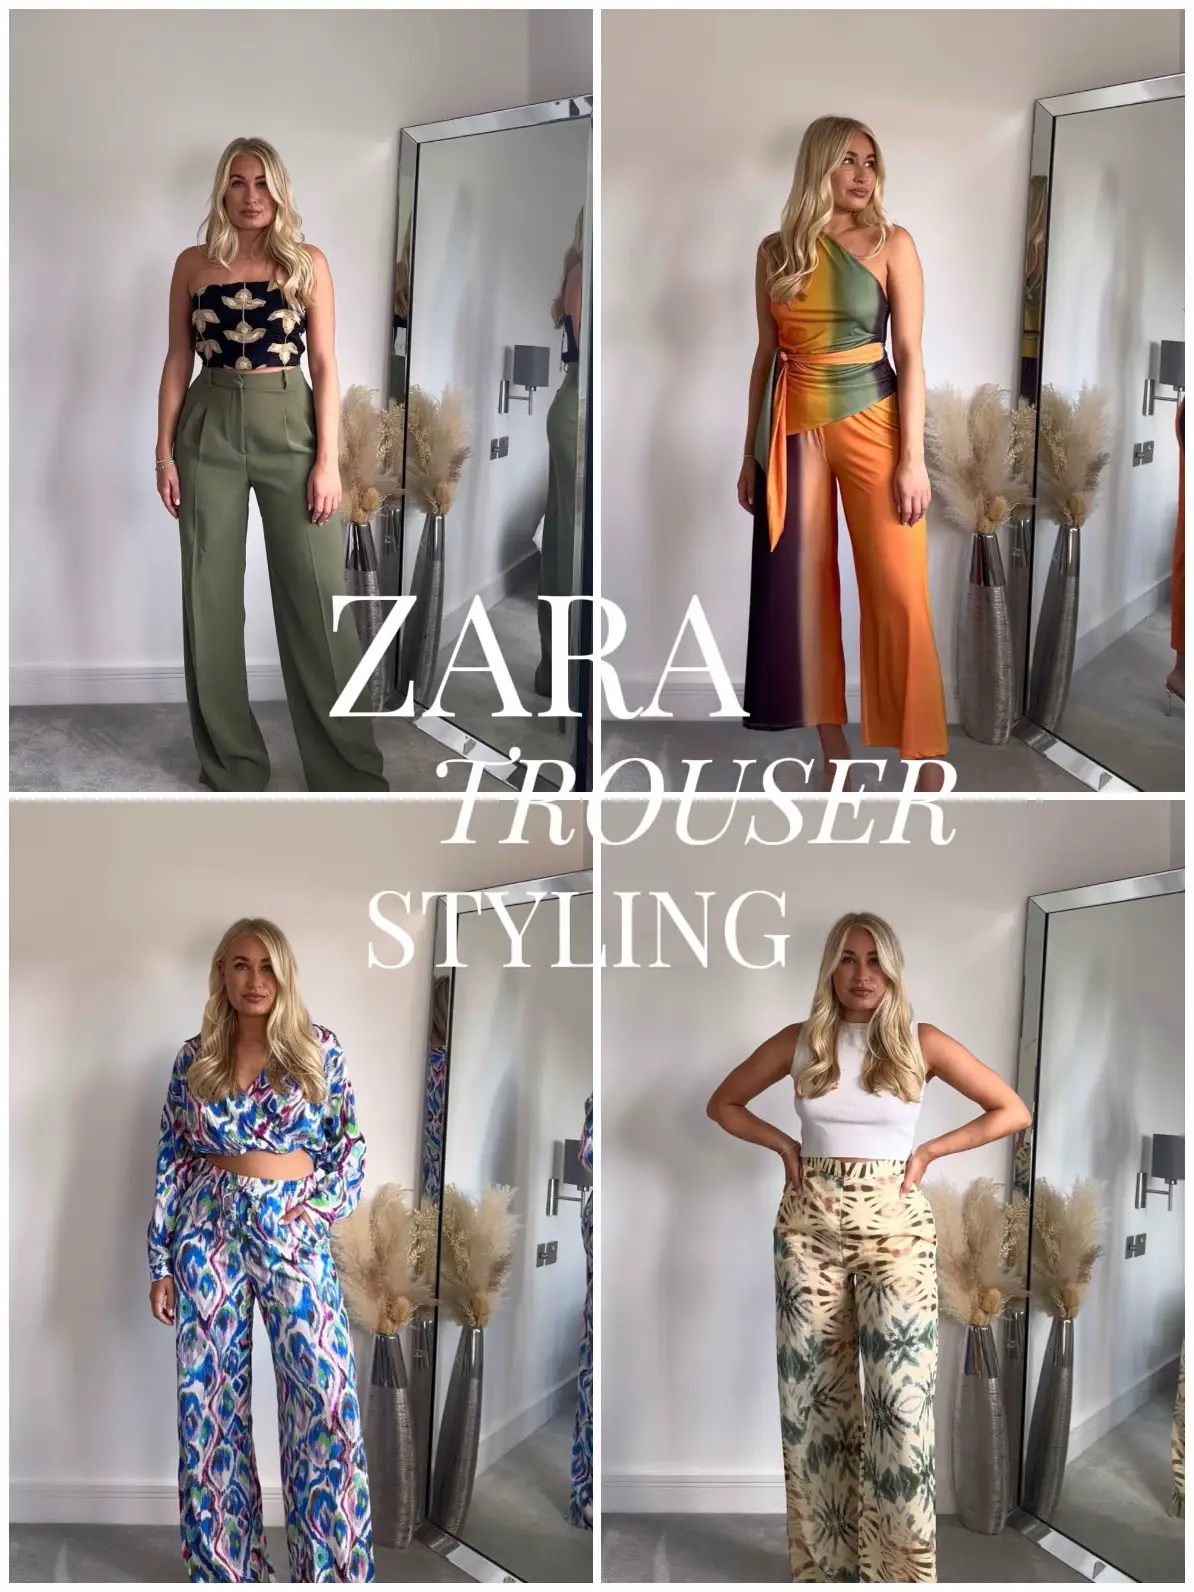 Zara Trouser Styling 🫶🏼, Gallery posted by wornbymolly